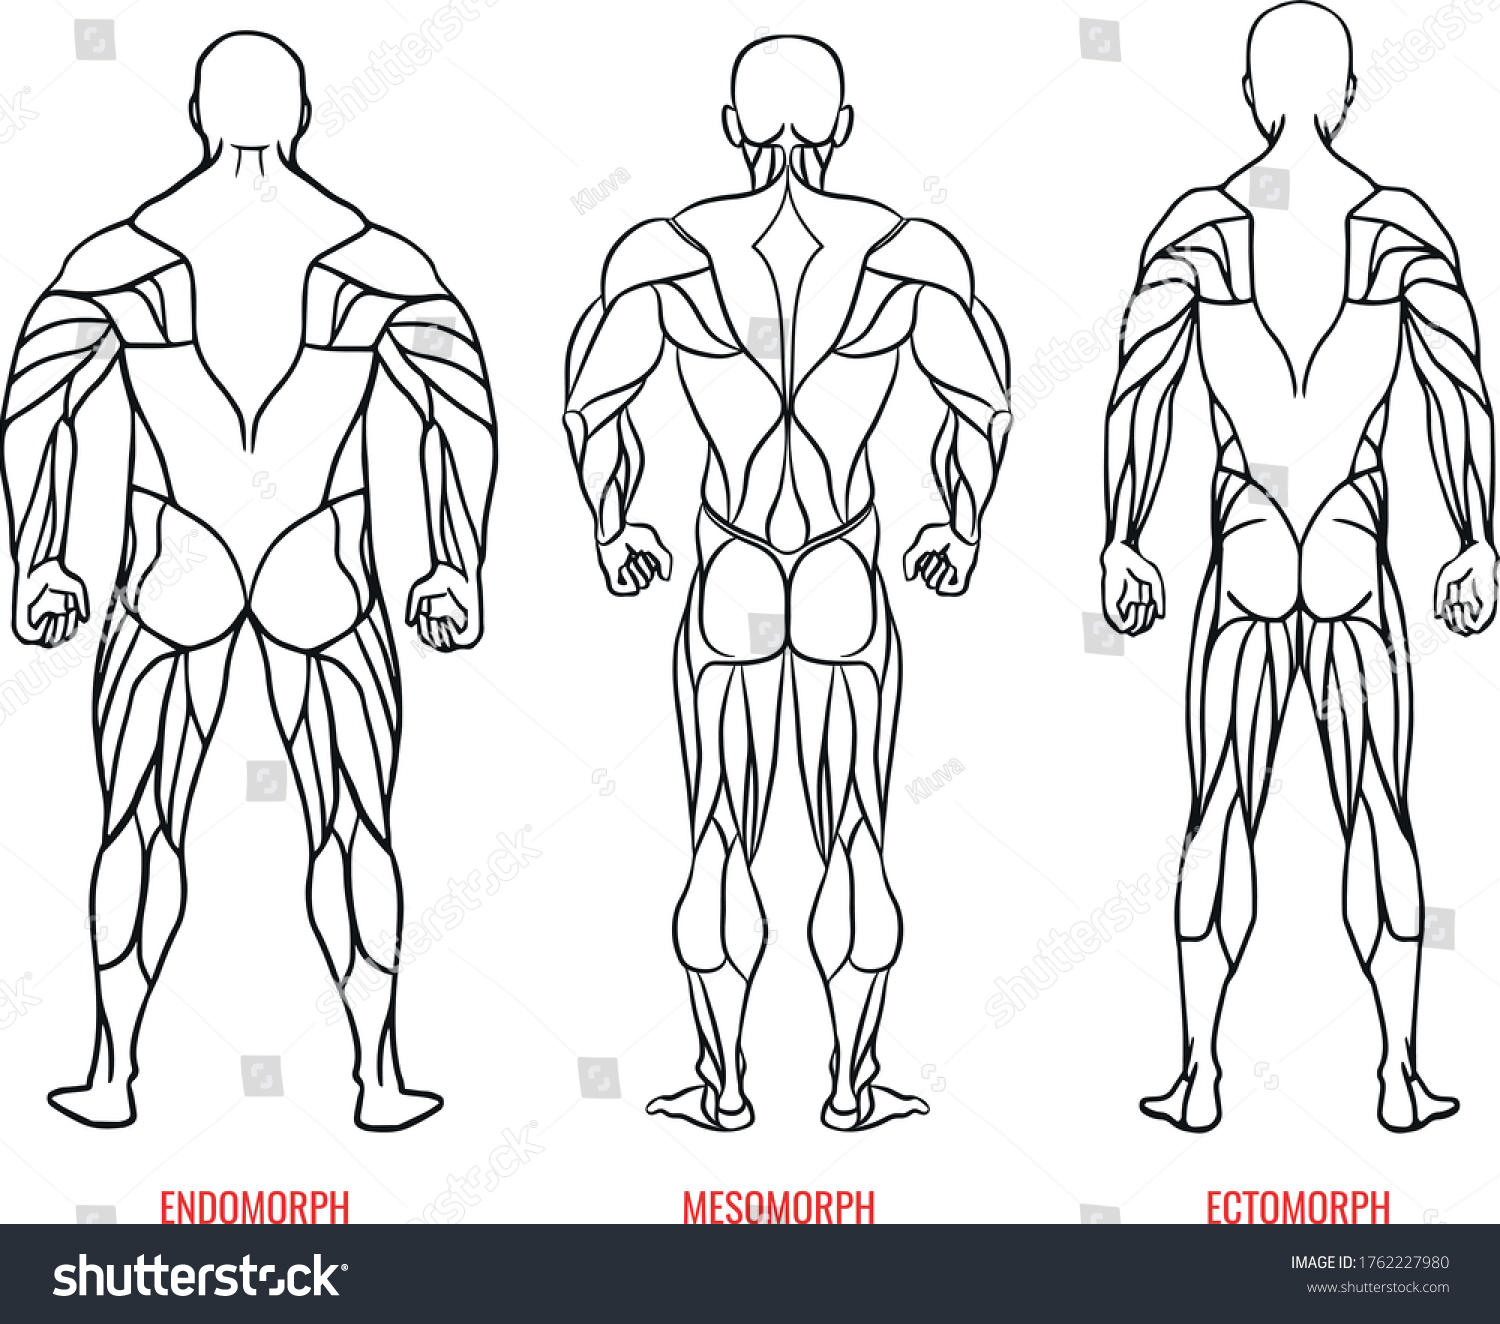 Men Body Types Diagram Three Somatotypes Stock Vector Royalty Free 1762227980 Shutterstock 